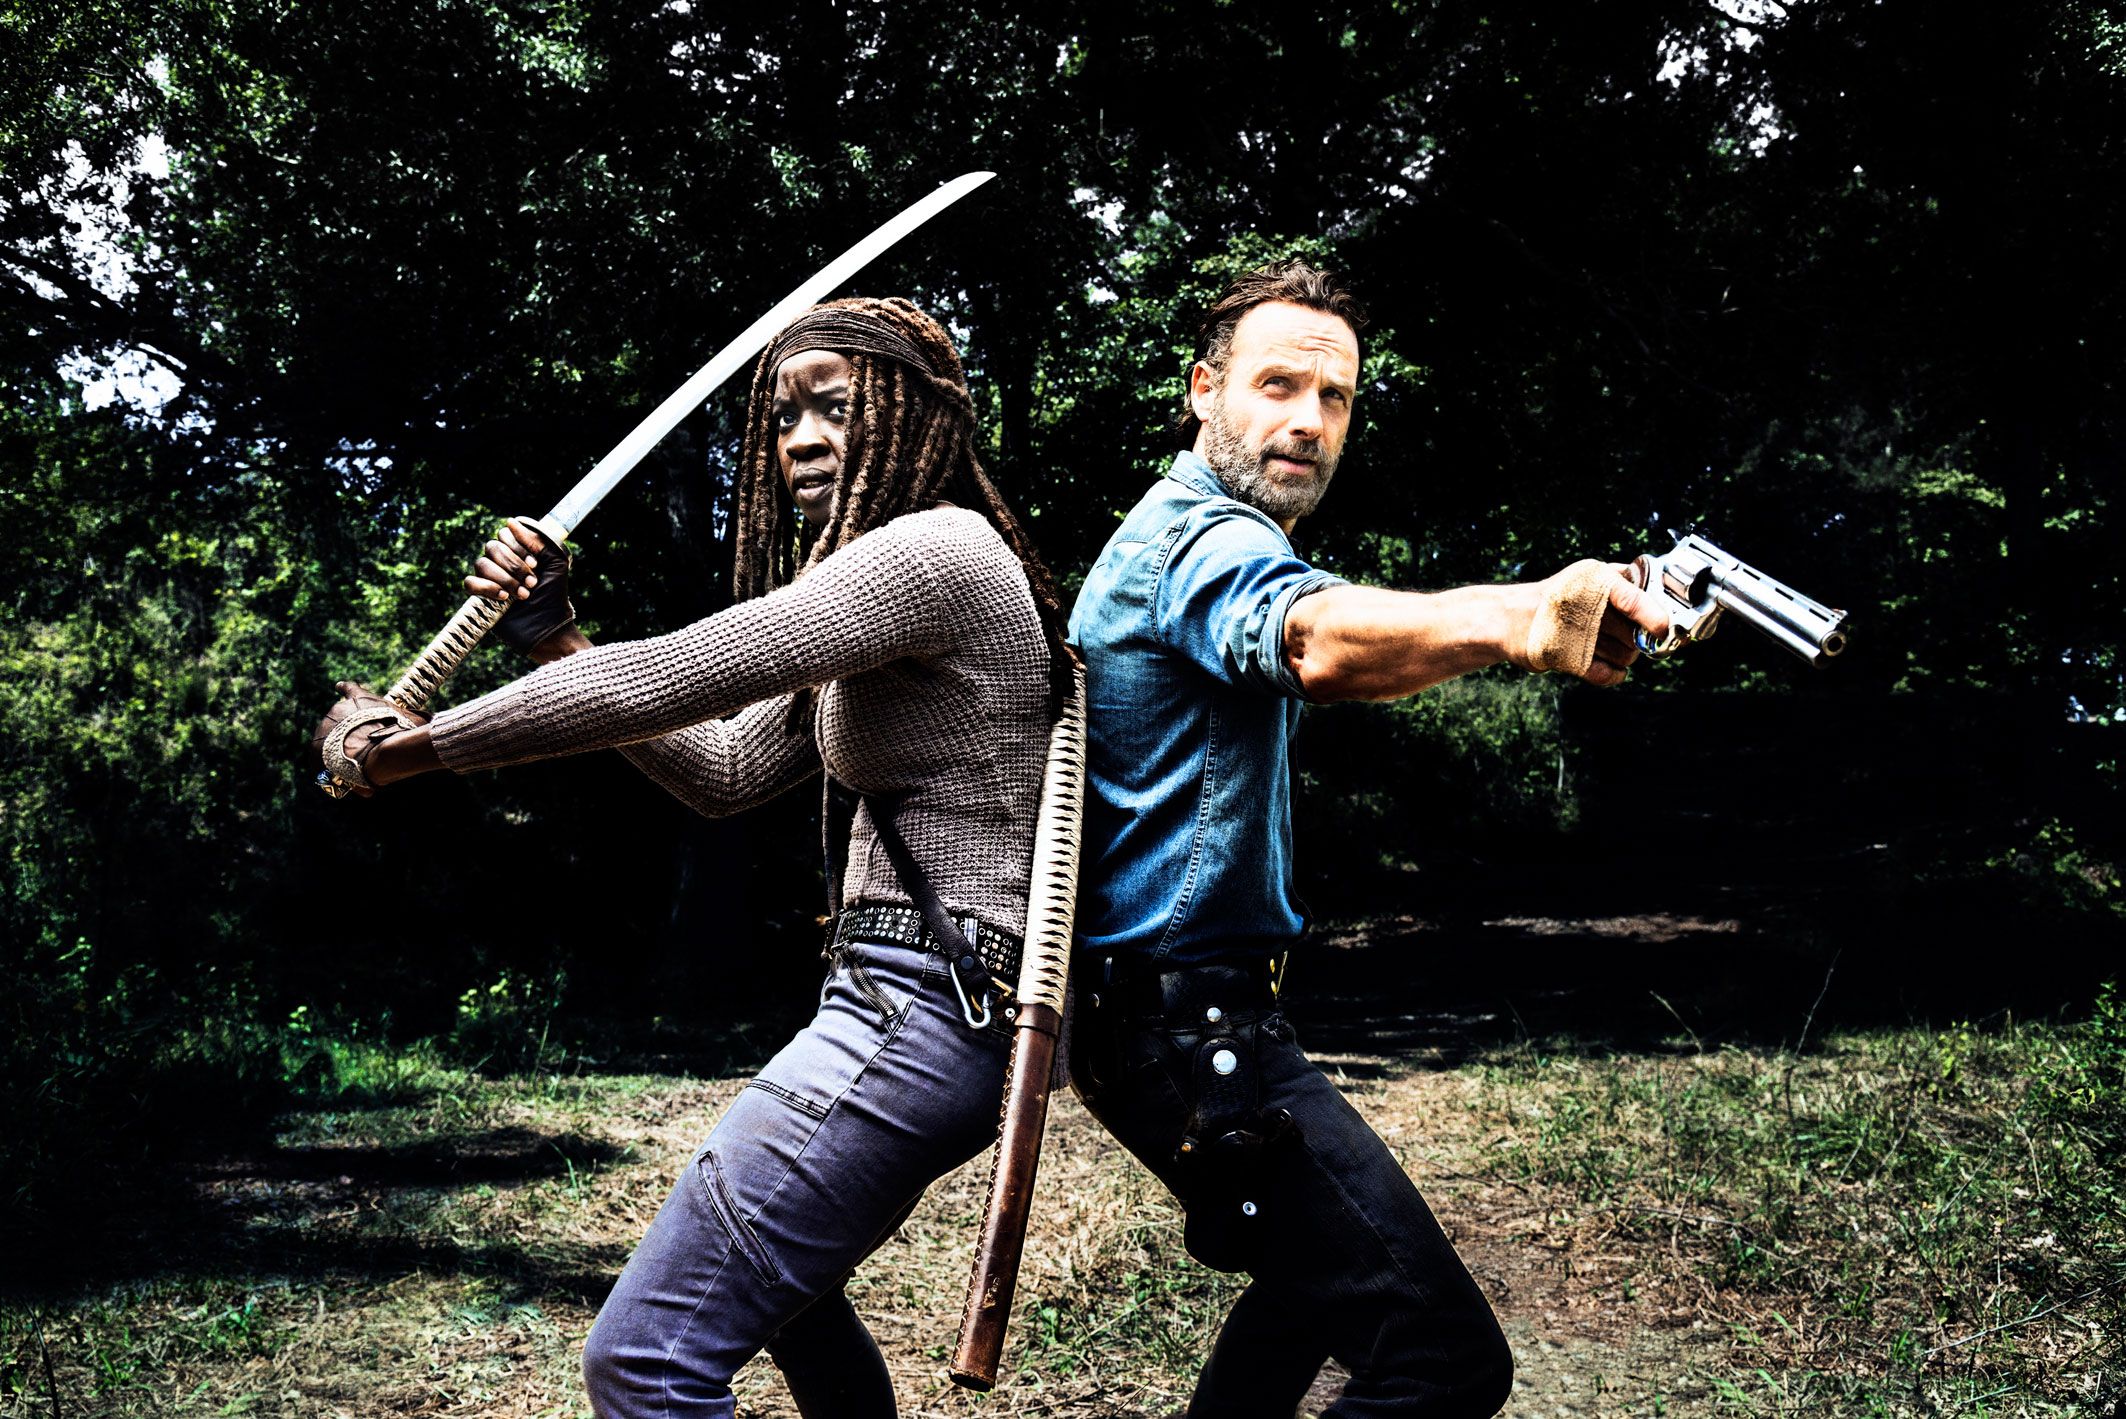 Rick and Michonne